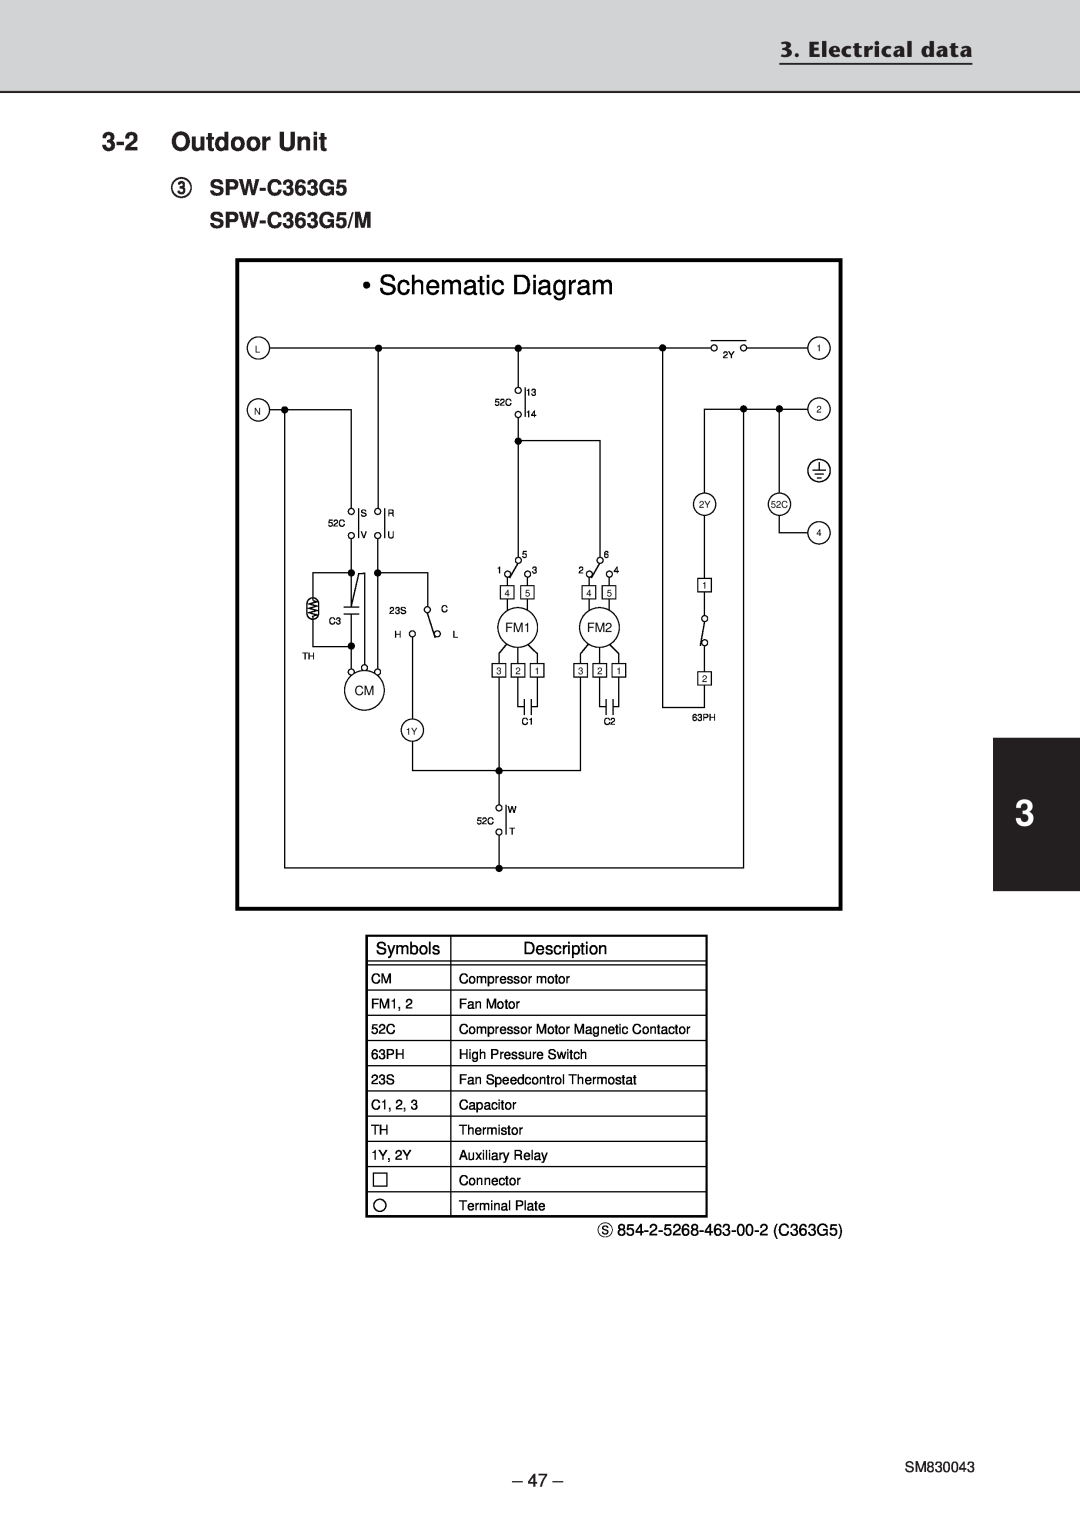 Sanyo SPW-C303G5 Schematic Diagram, 3-2Outdoor Unit, Electrical data, Symbols, Description, S 854-2-5268-463-00-2C363G5 